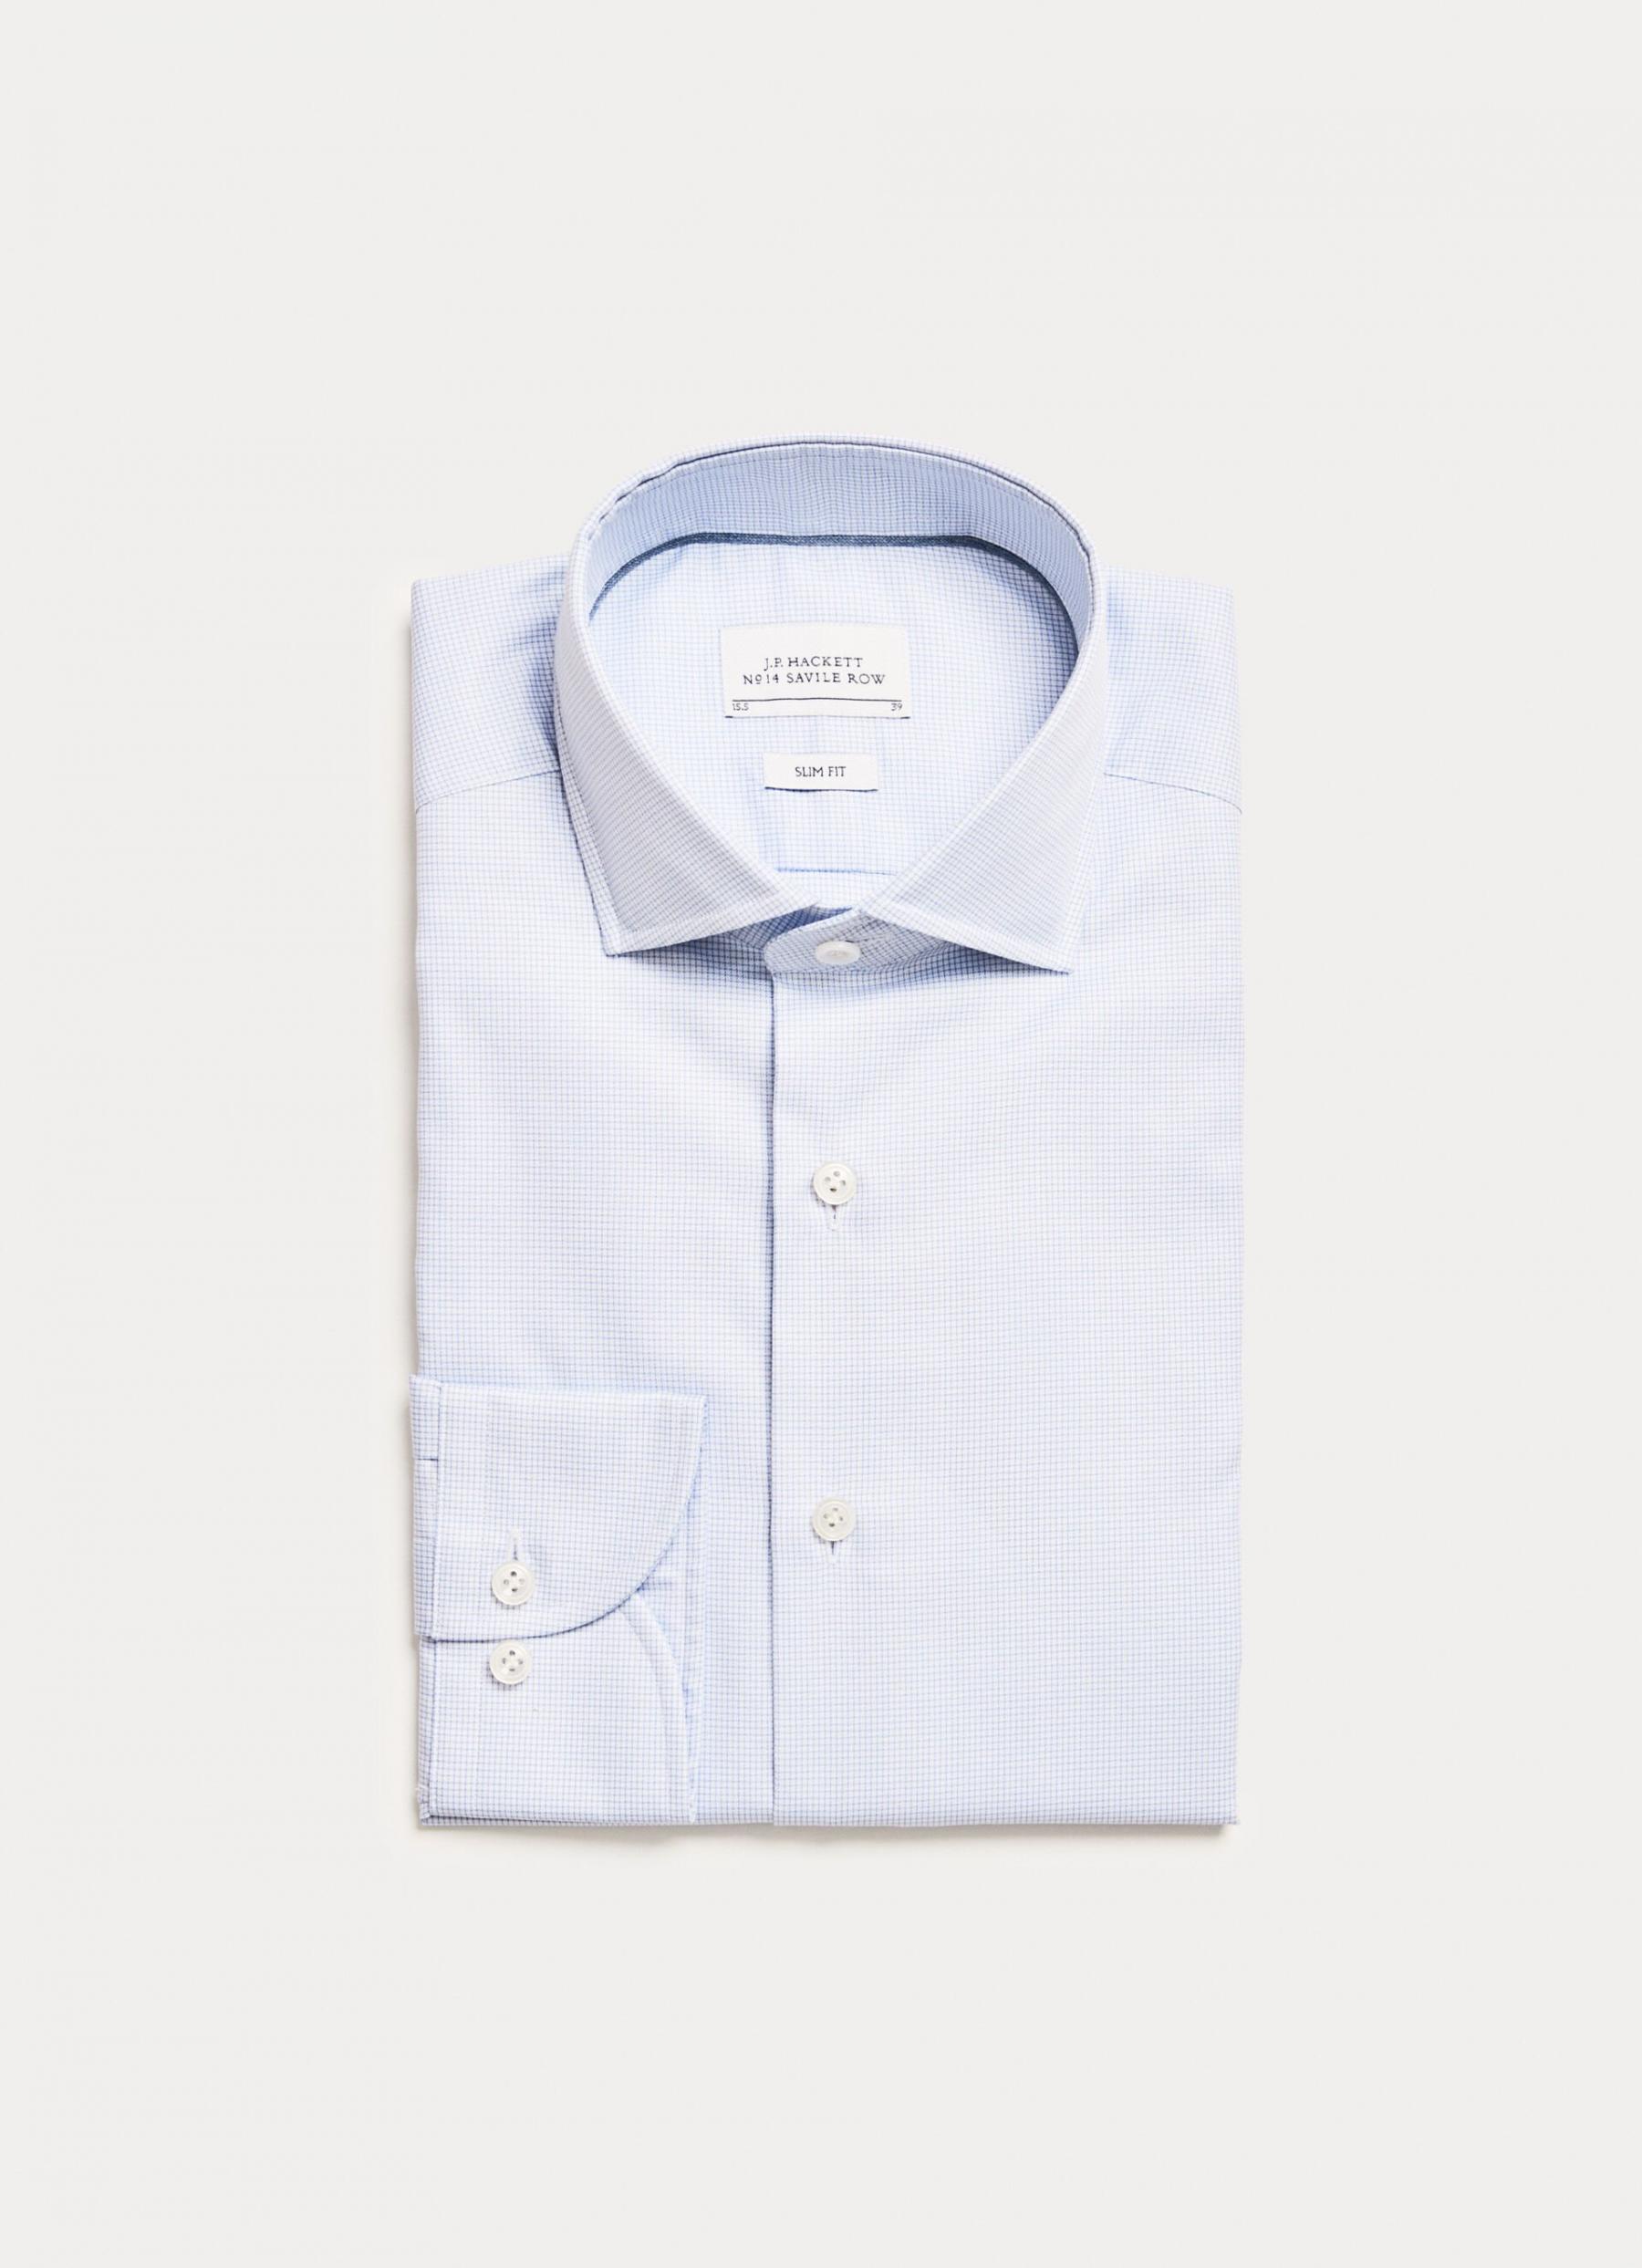 Hackett Hackett JP No.14 Savile Row Shirt Button Cuff White 15.5 39 Slim Fit 